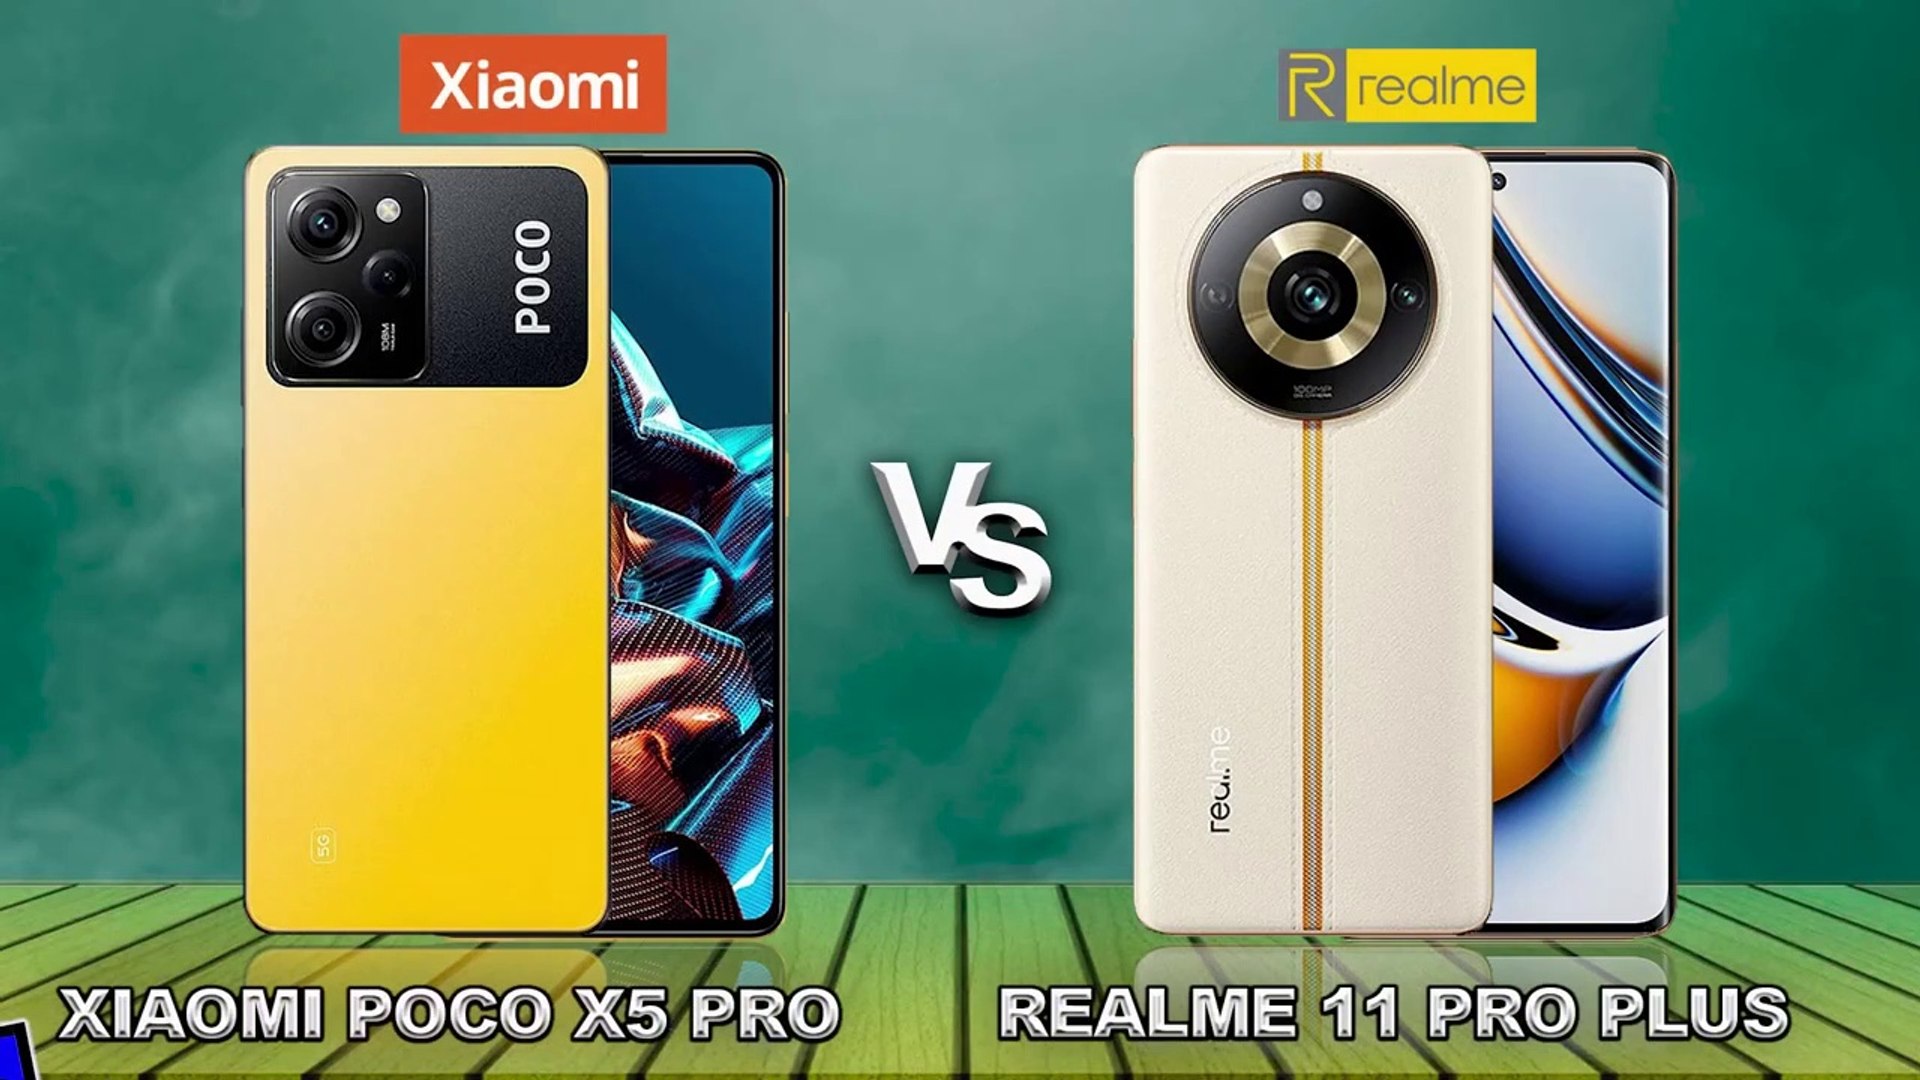 Poco X3 Pro vs Poco X5 Pro 